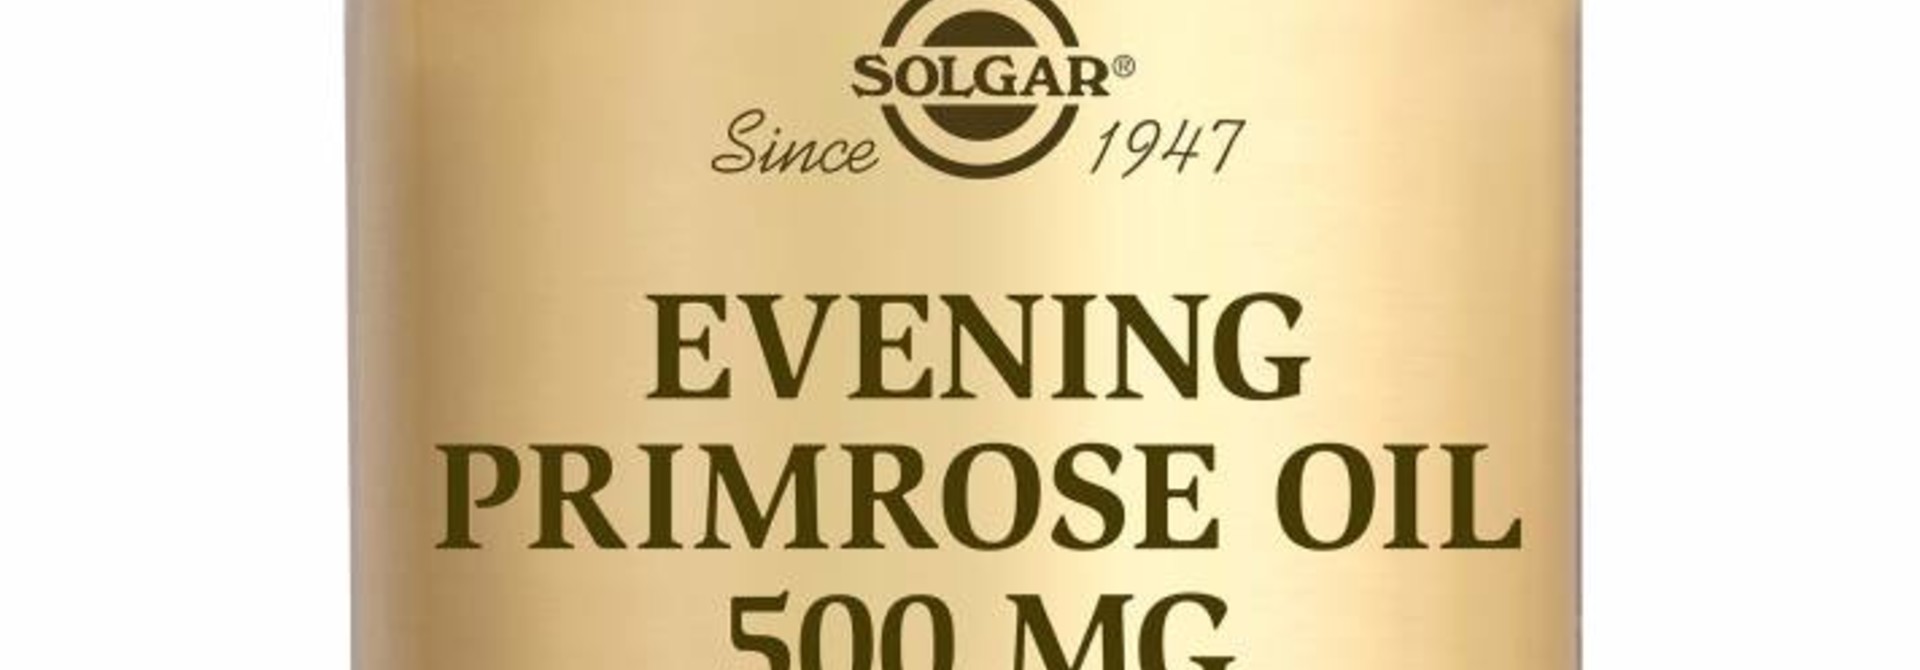 Evening Primrose Oil 500 mg 30 softgels